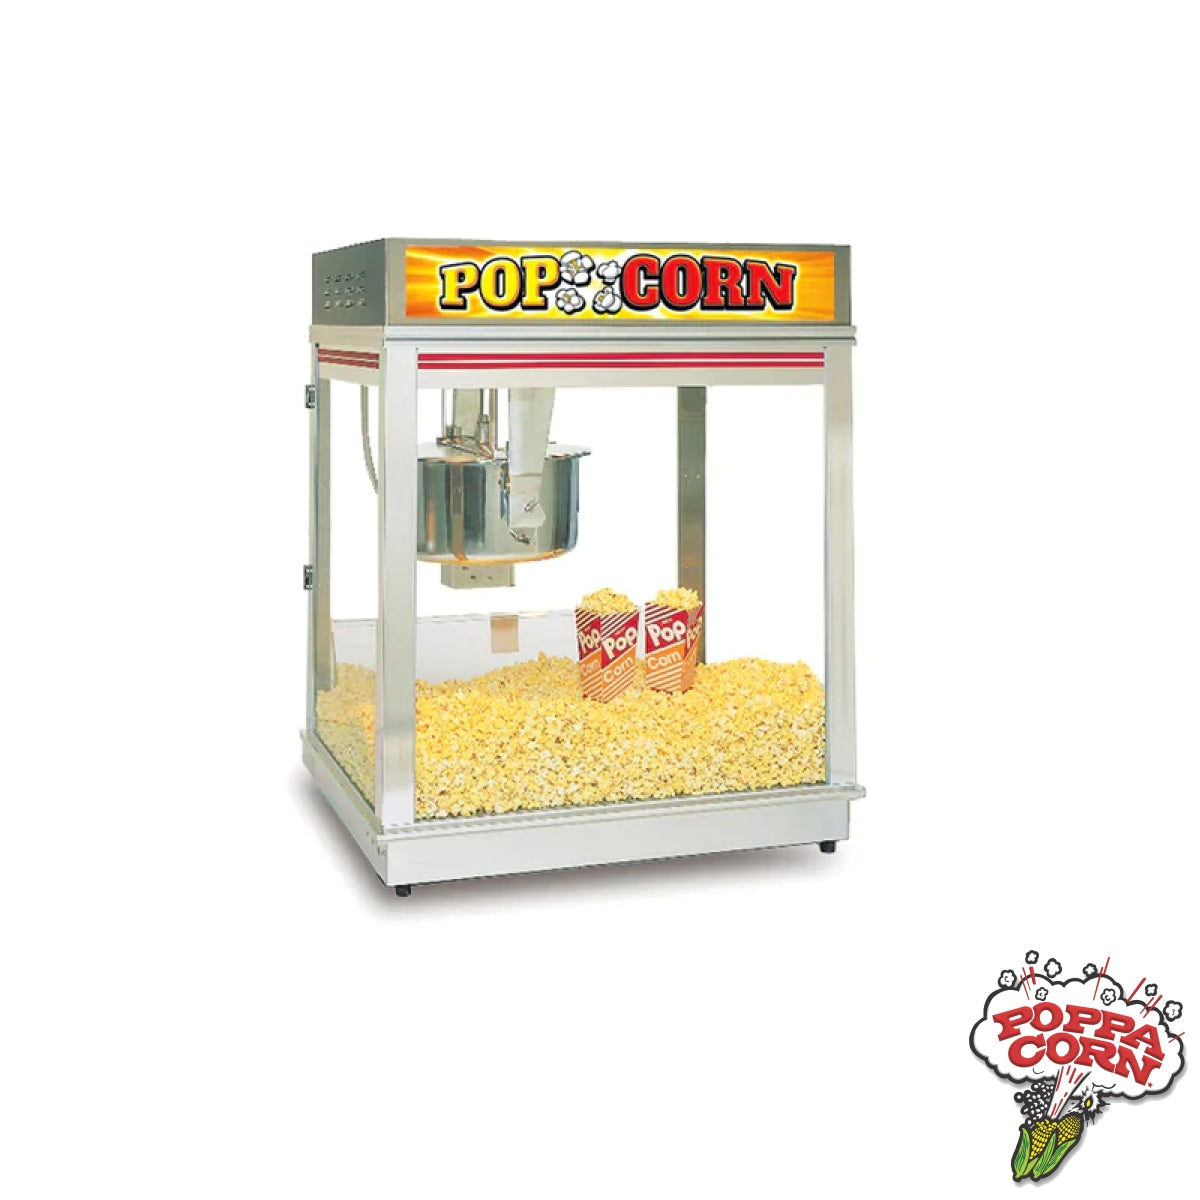 Pop-O-Gold 32 Oz. Counter Popcorn Machine - Gm2011-070U Demo Equipment